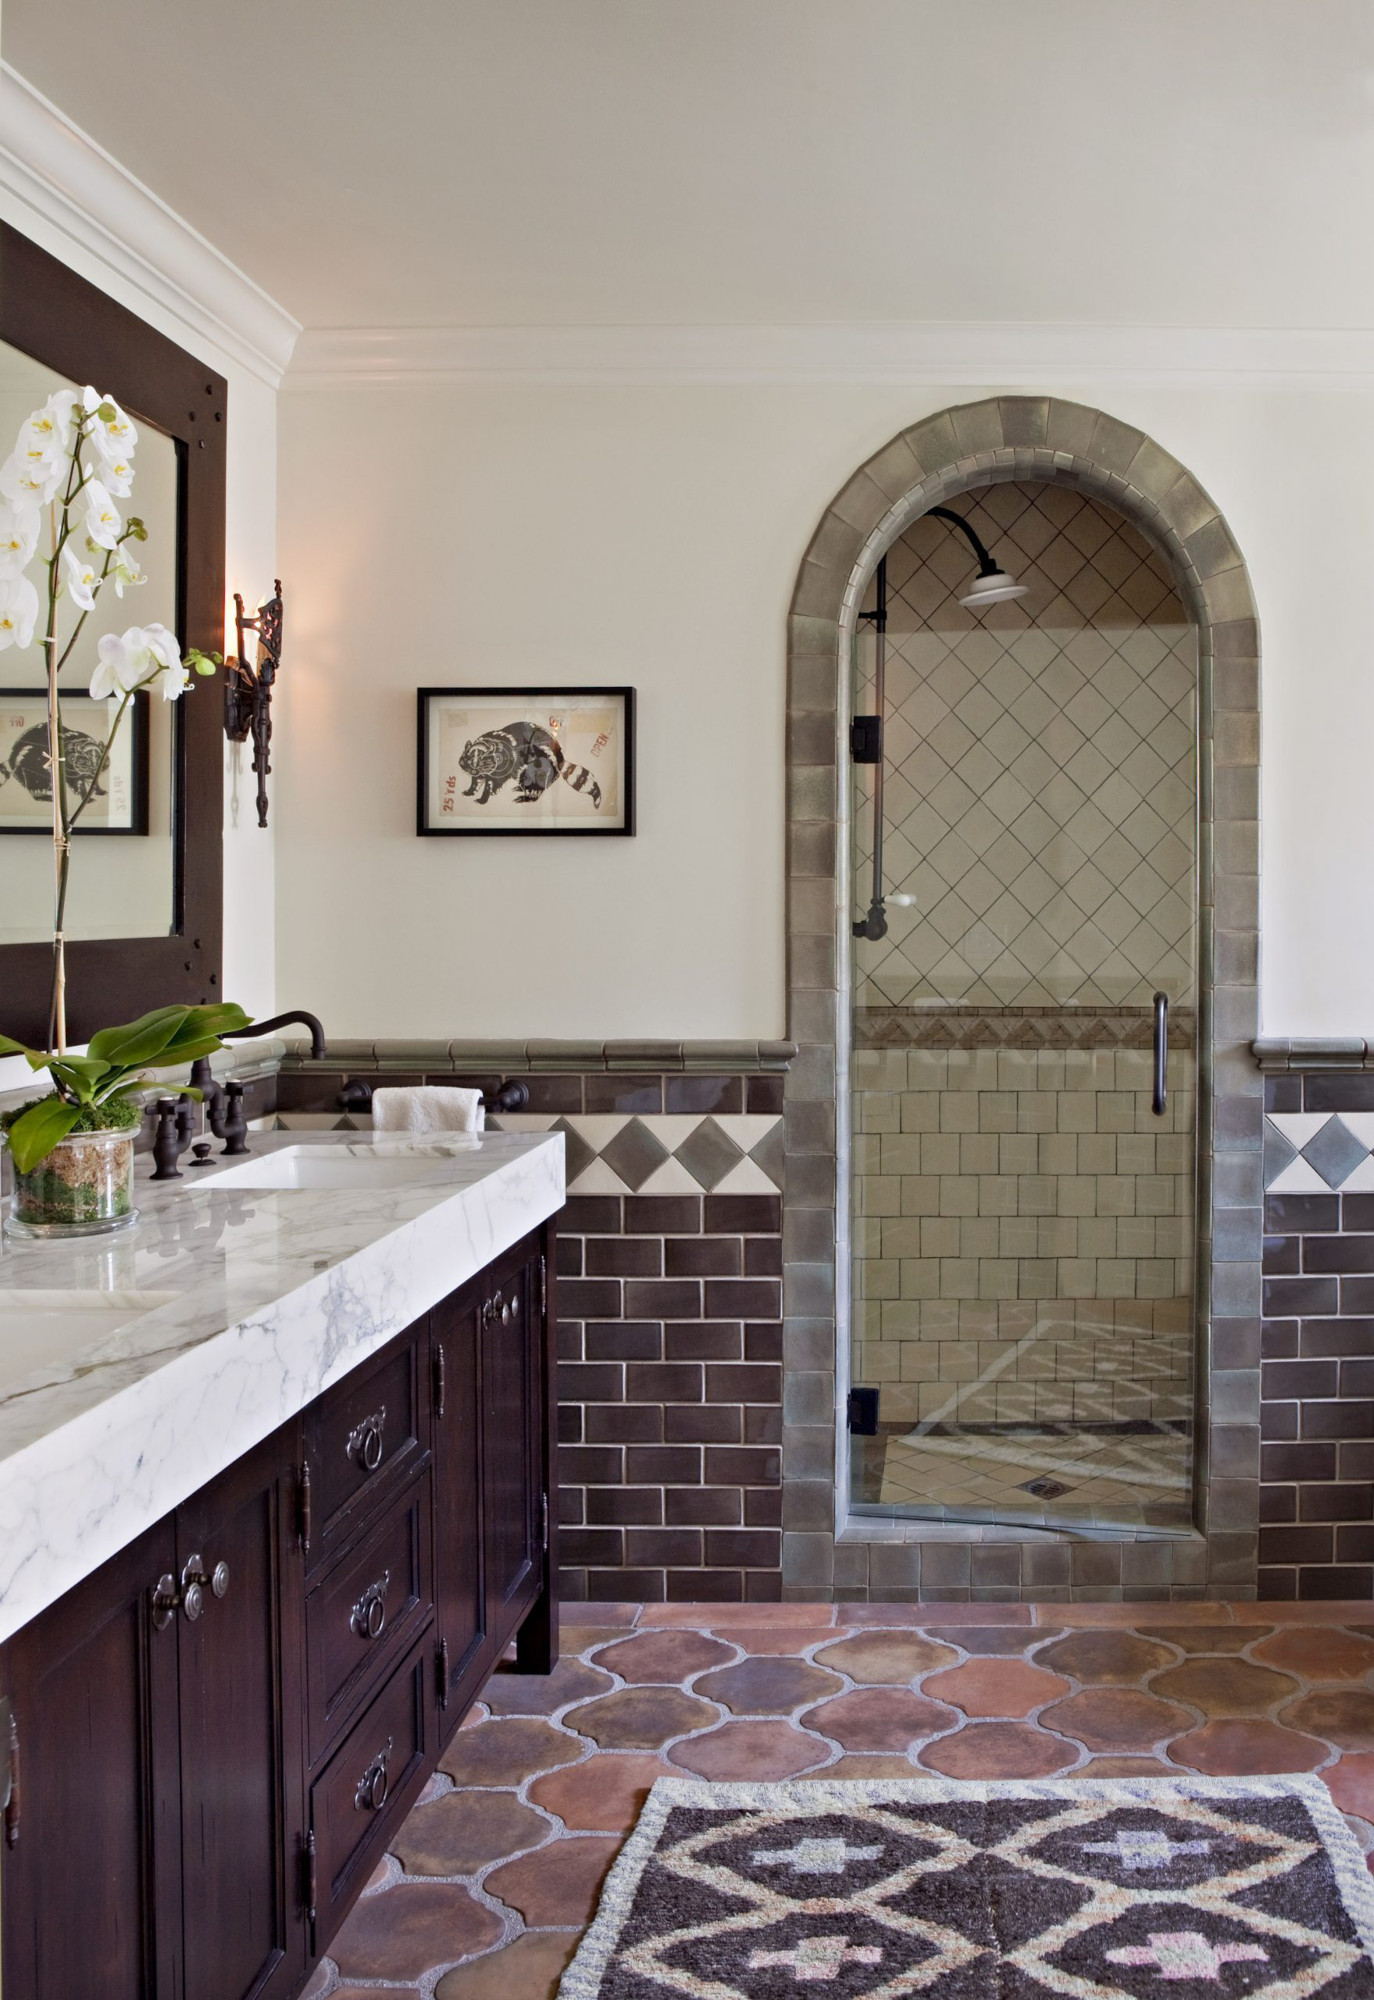 Bathroom with terracotta floor tiles, purple wall tiles and border